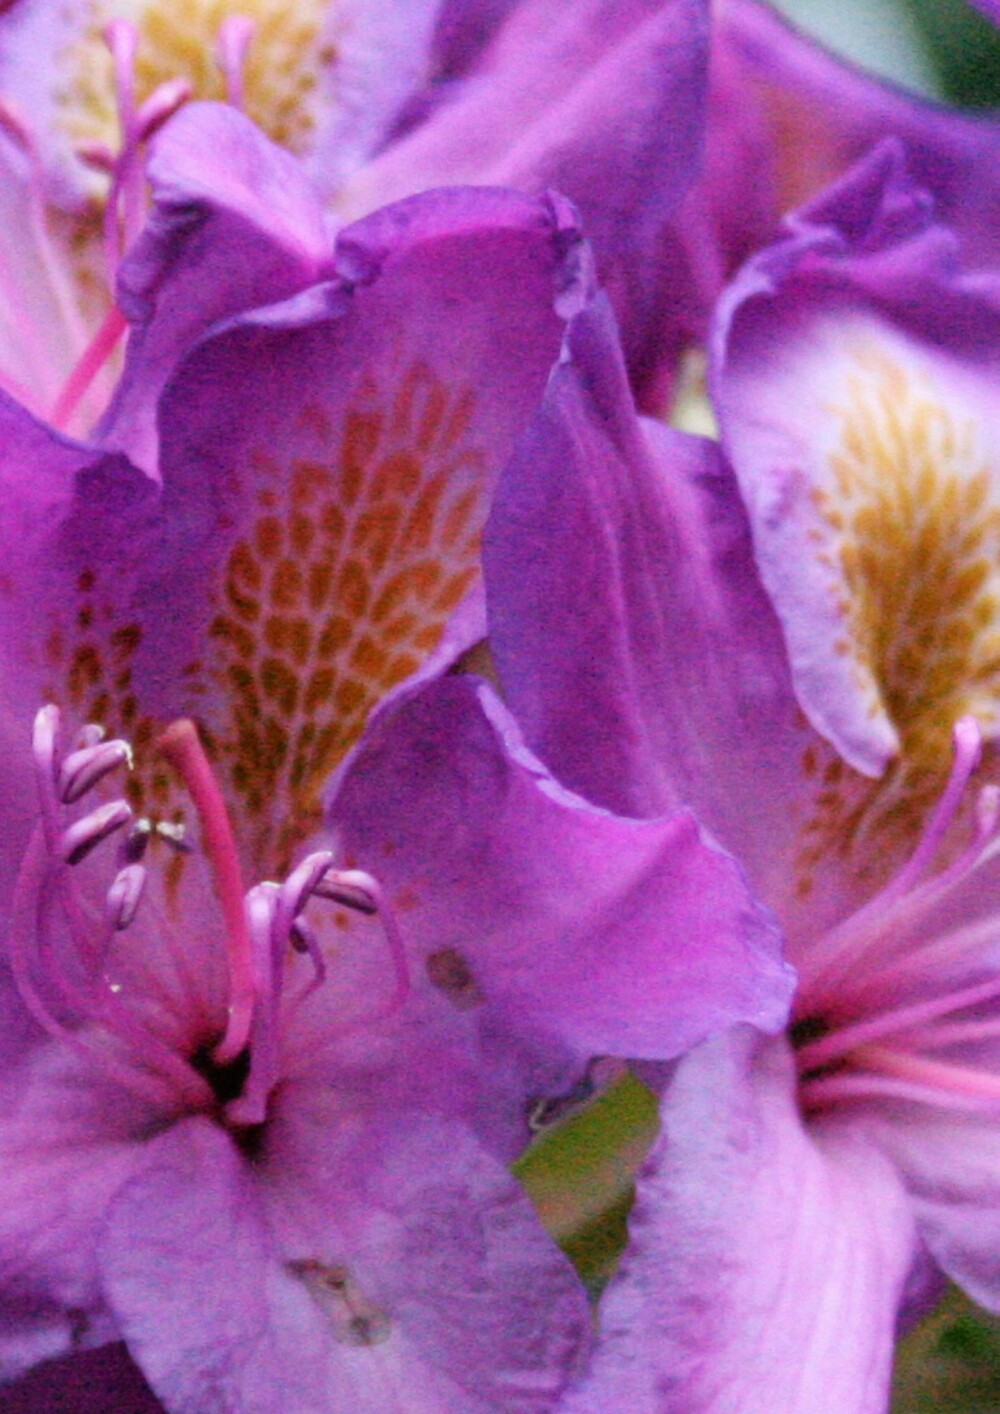 LIKER IKKE: Rhododenron er en fin prydbusk med vintergrønne blad. Den har store blomsterklaser i mai¿juni.